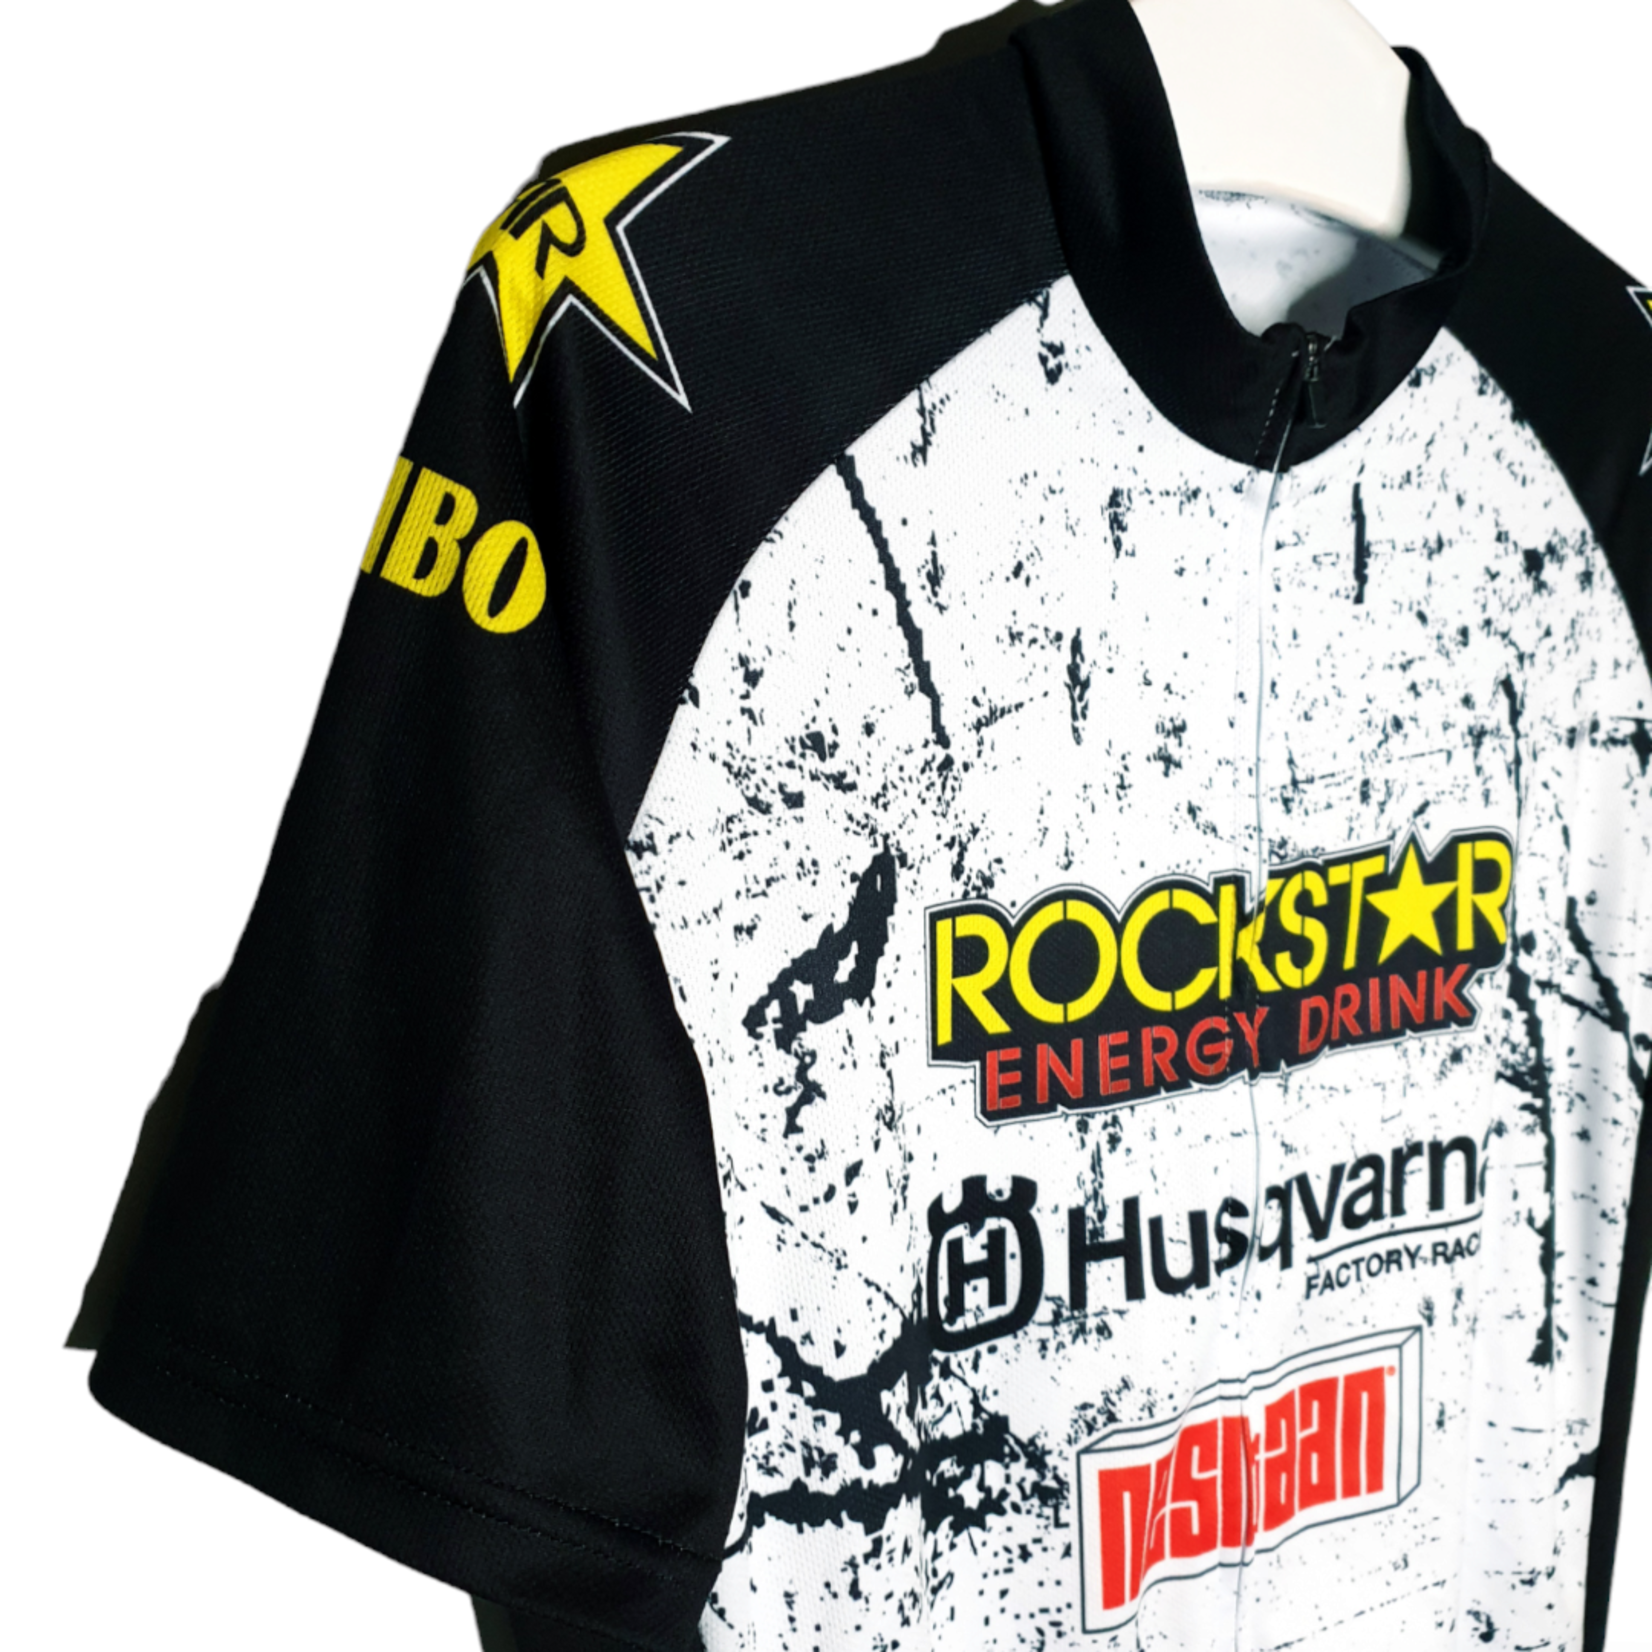 Retro Retro Husqvarna BT Racing wielershirt